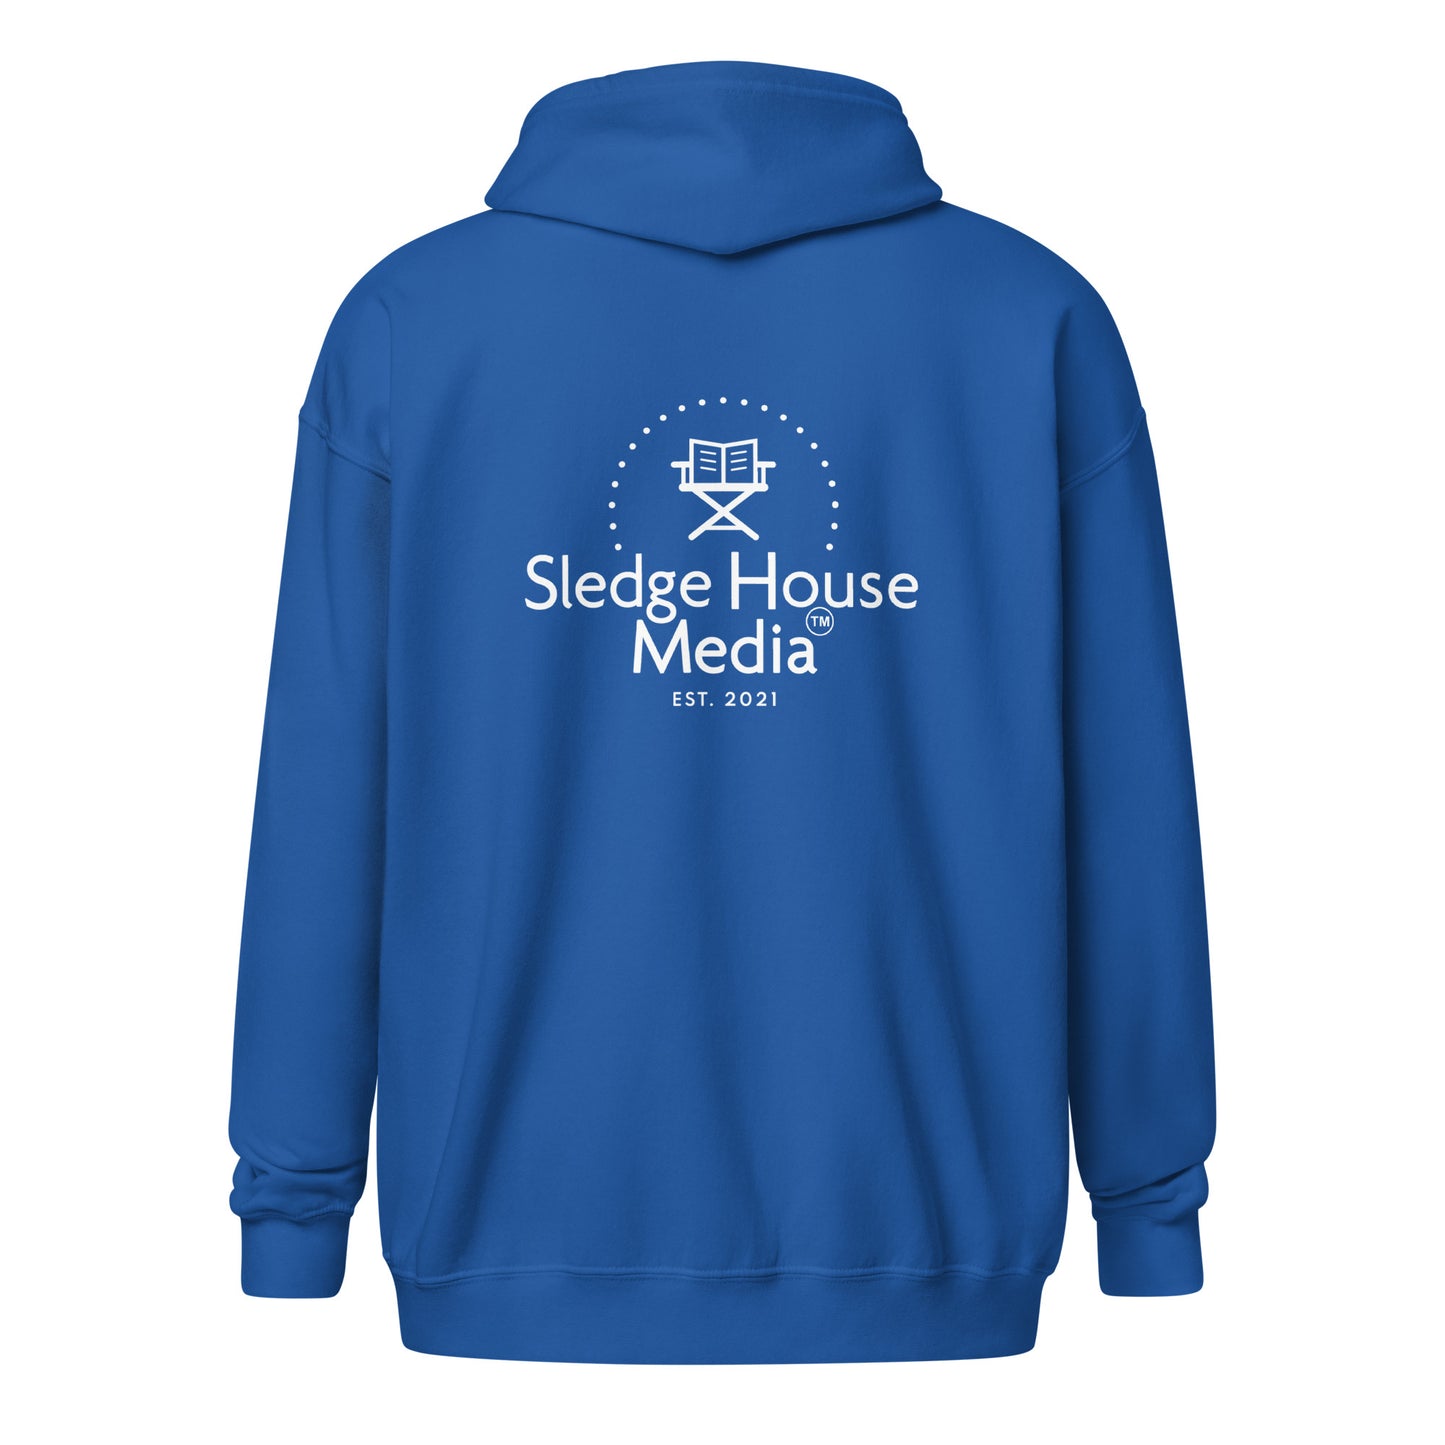 "The OG" Sledge House Media Cozy Zip Unisex Hoodie